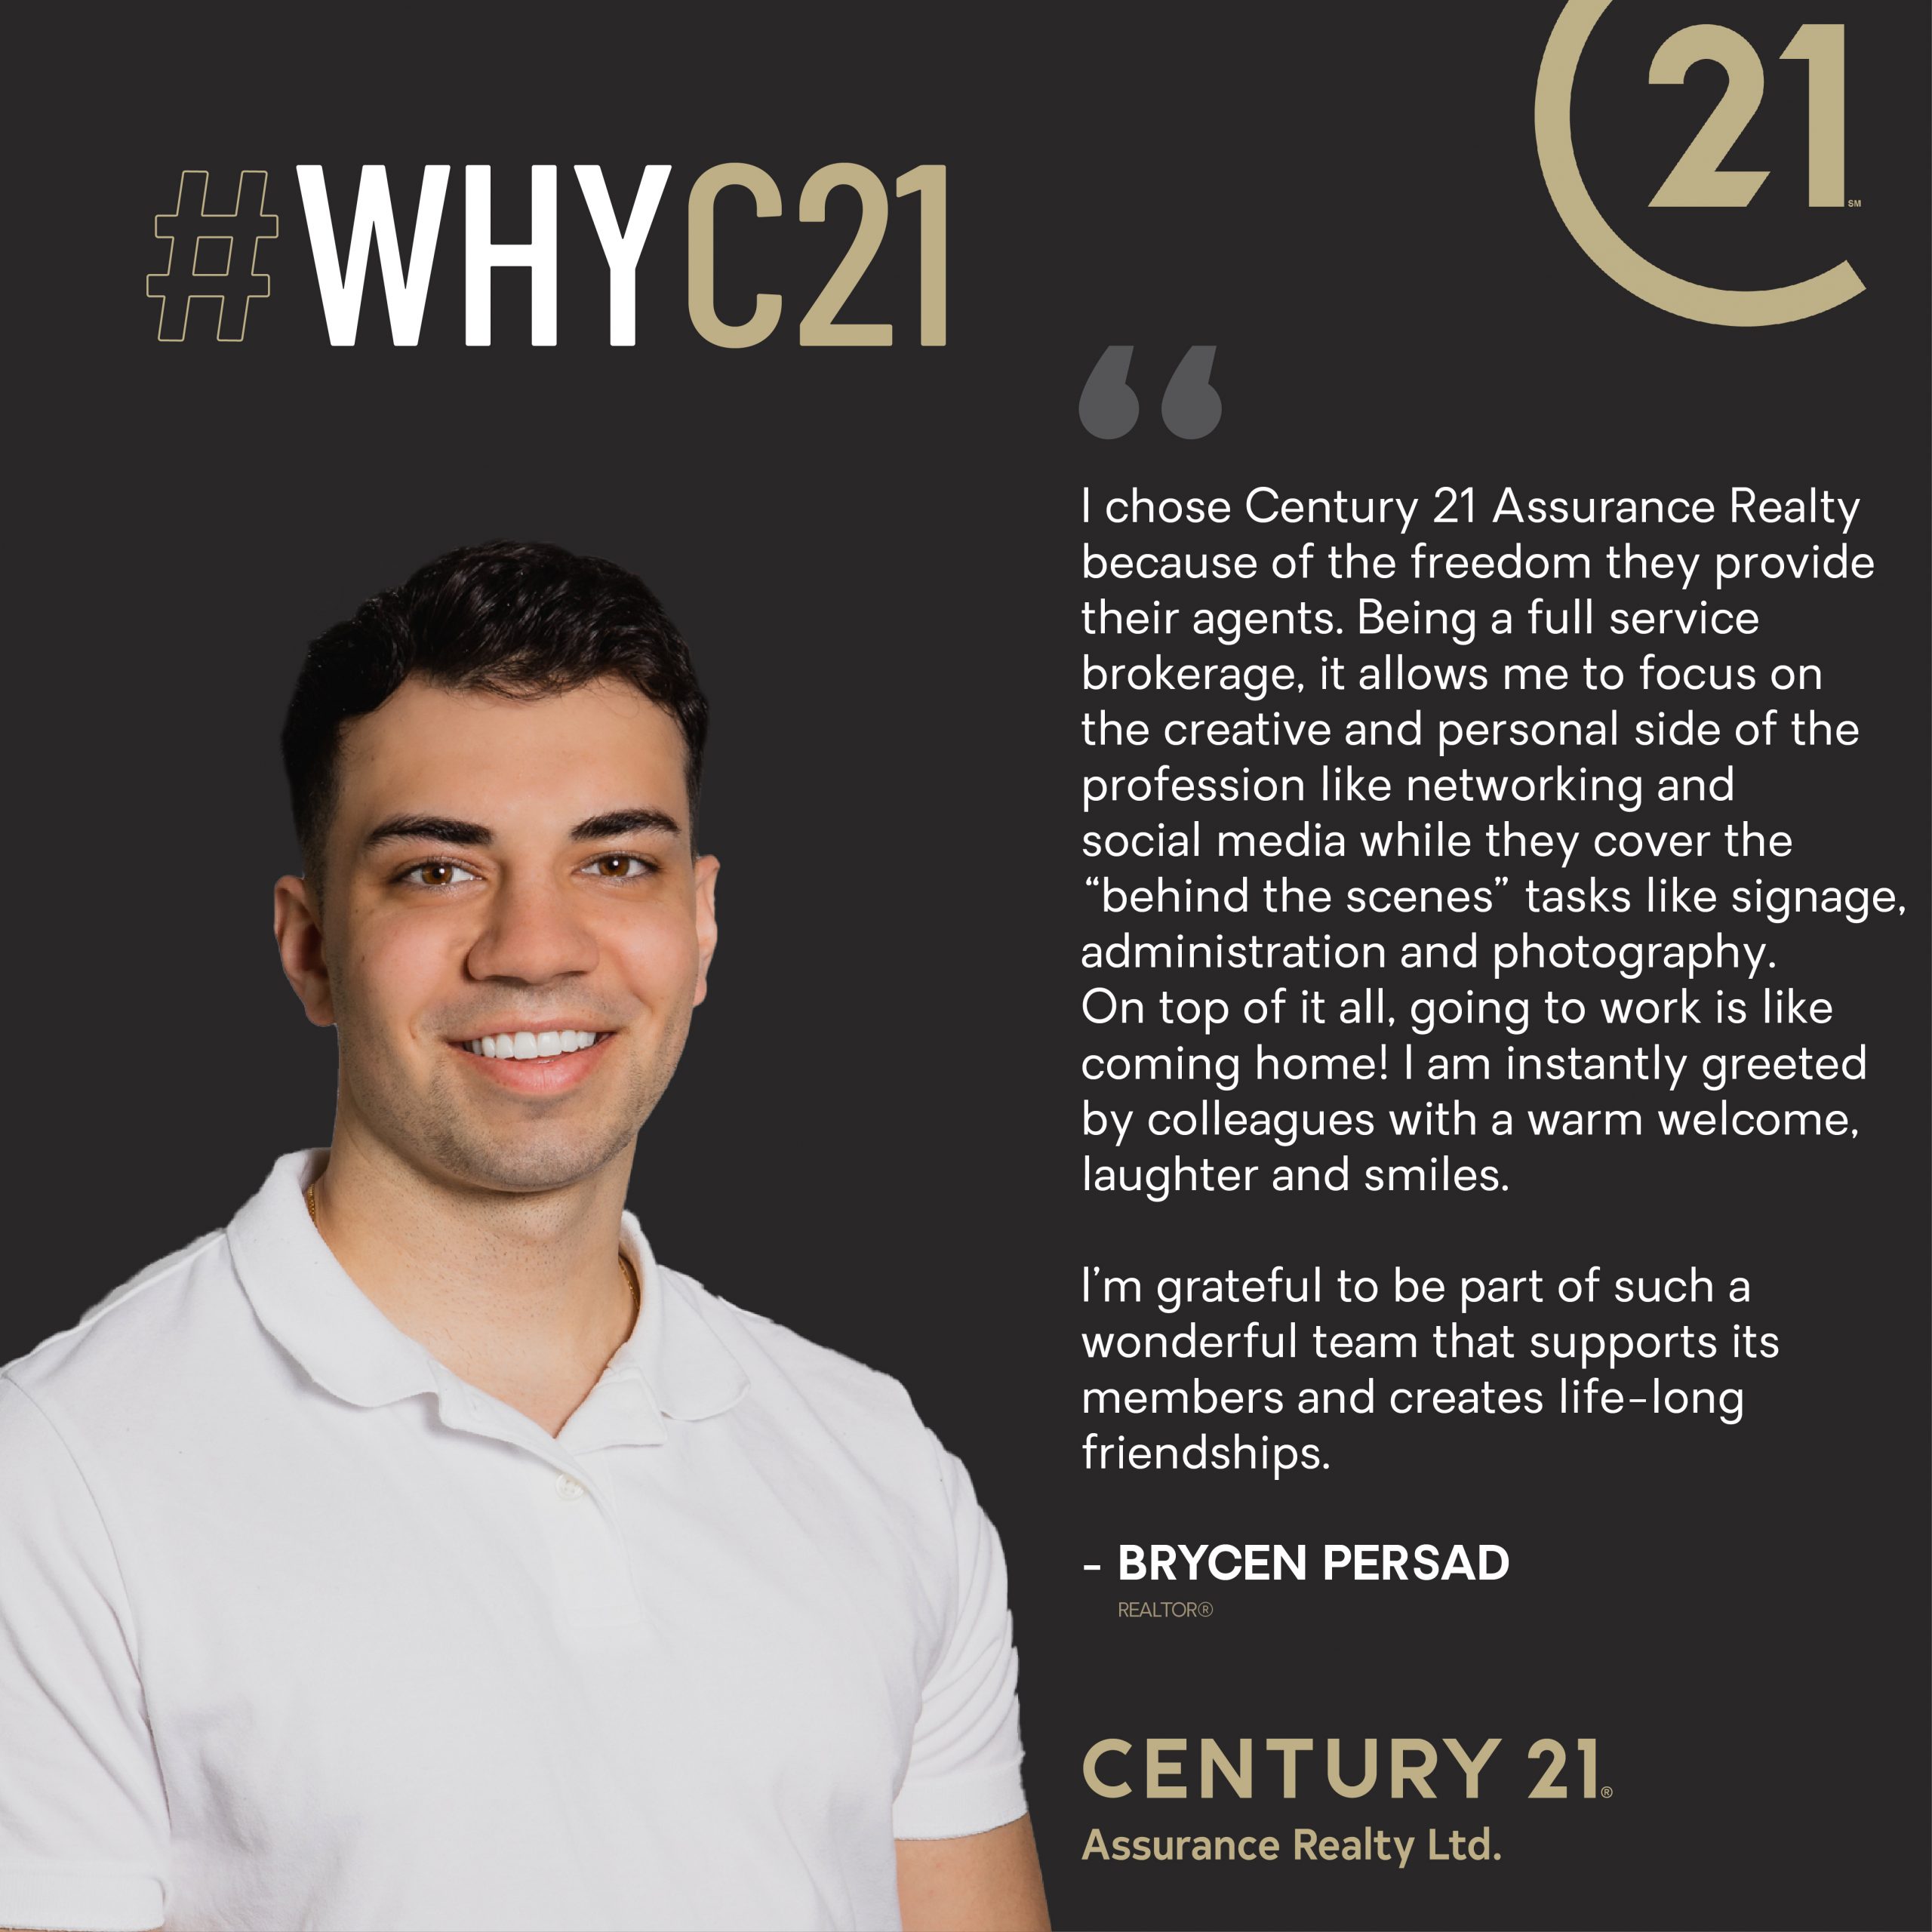 WhyC21_Brycen Persad